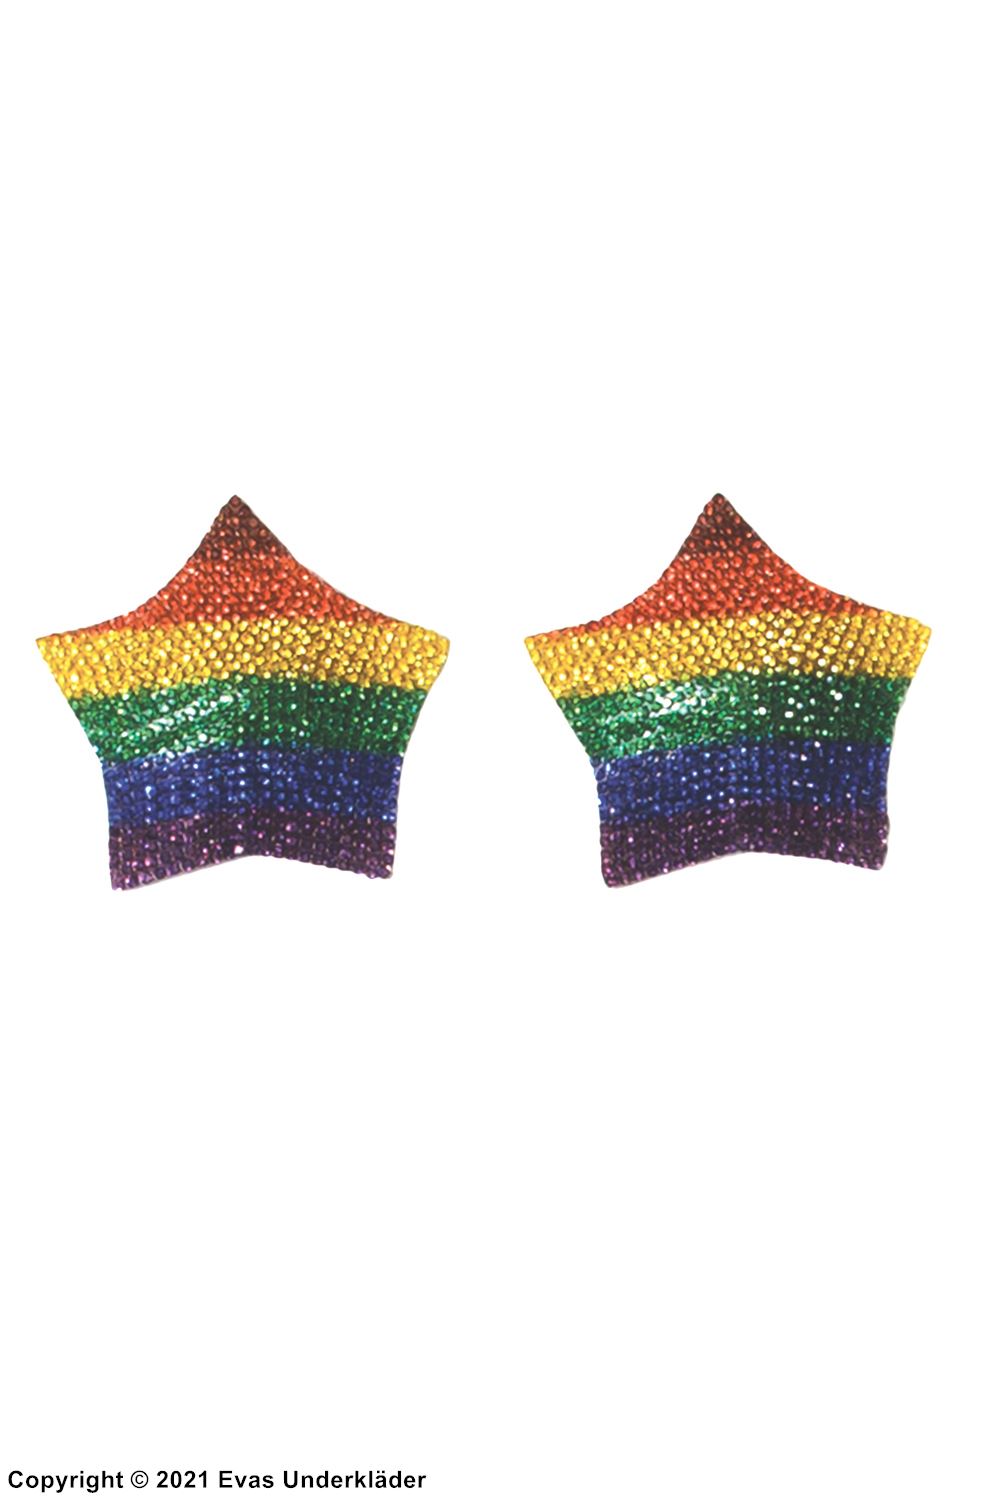 Self-adhesive nipple cover/patch, rhinestones, stars, rainbow color